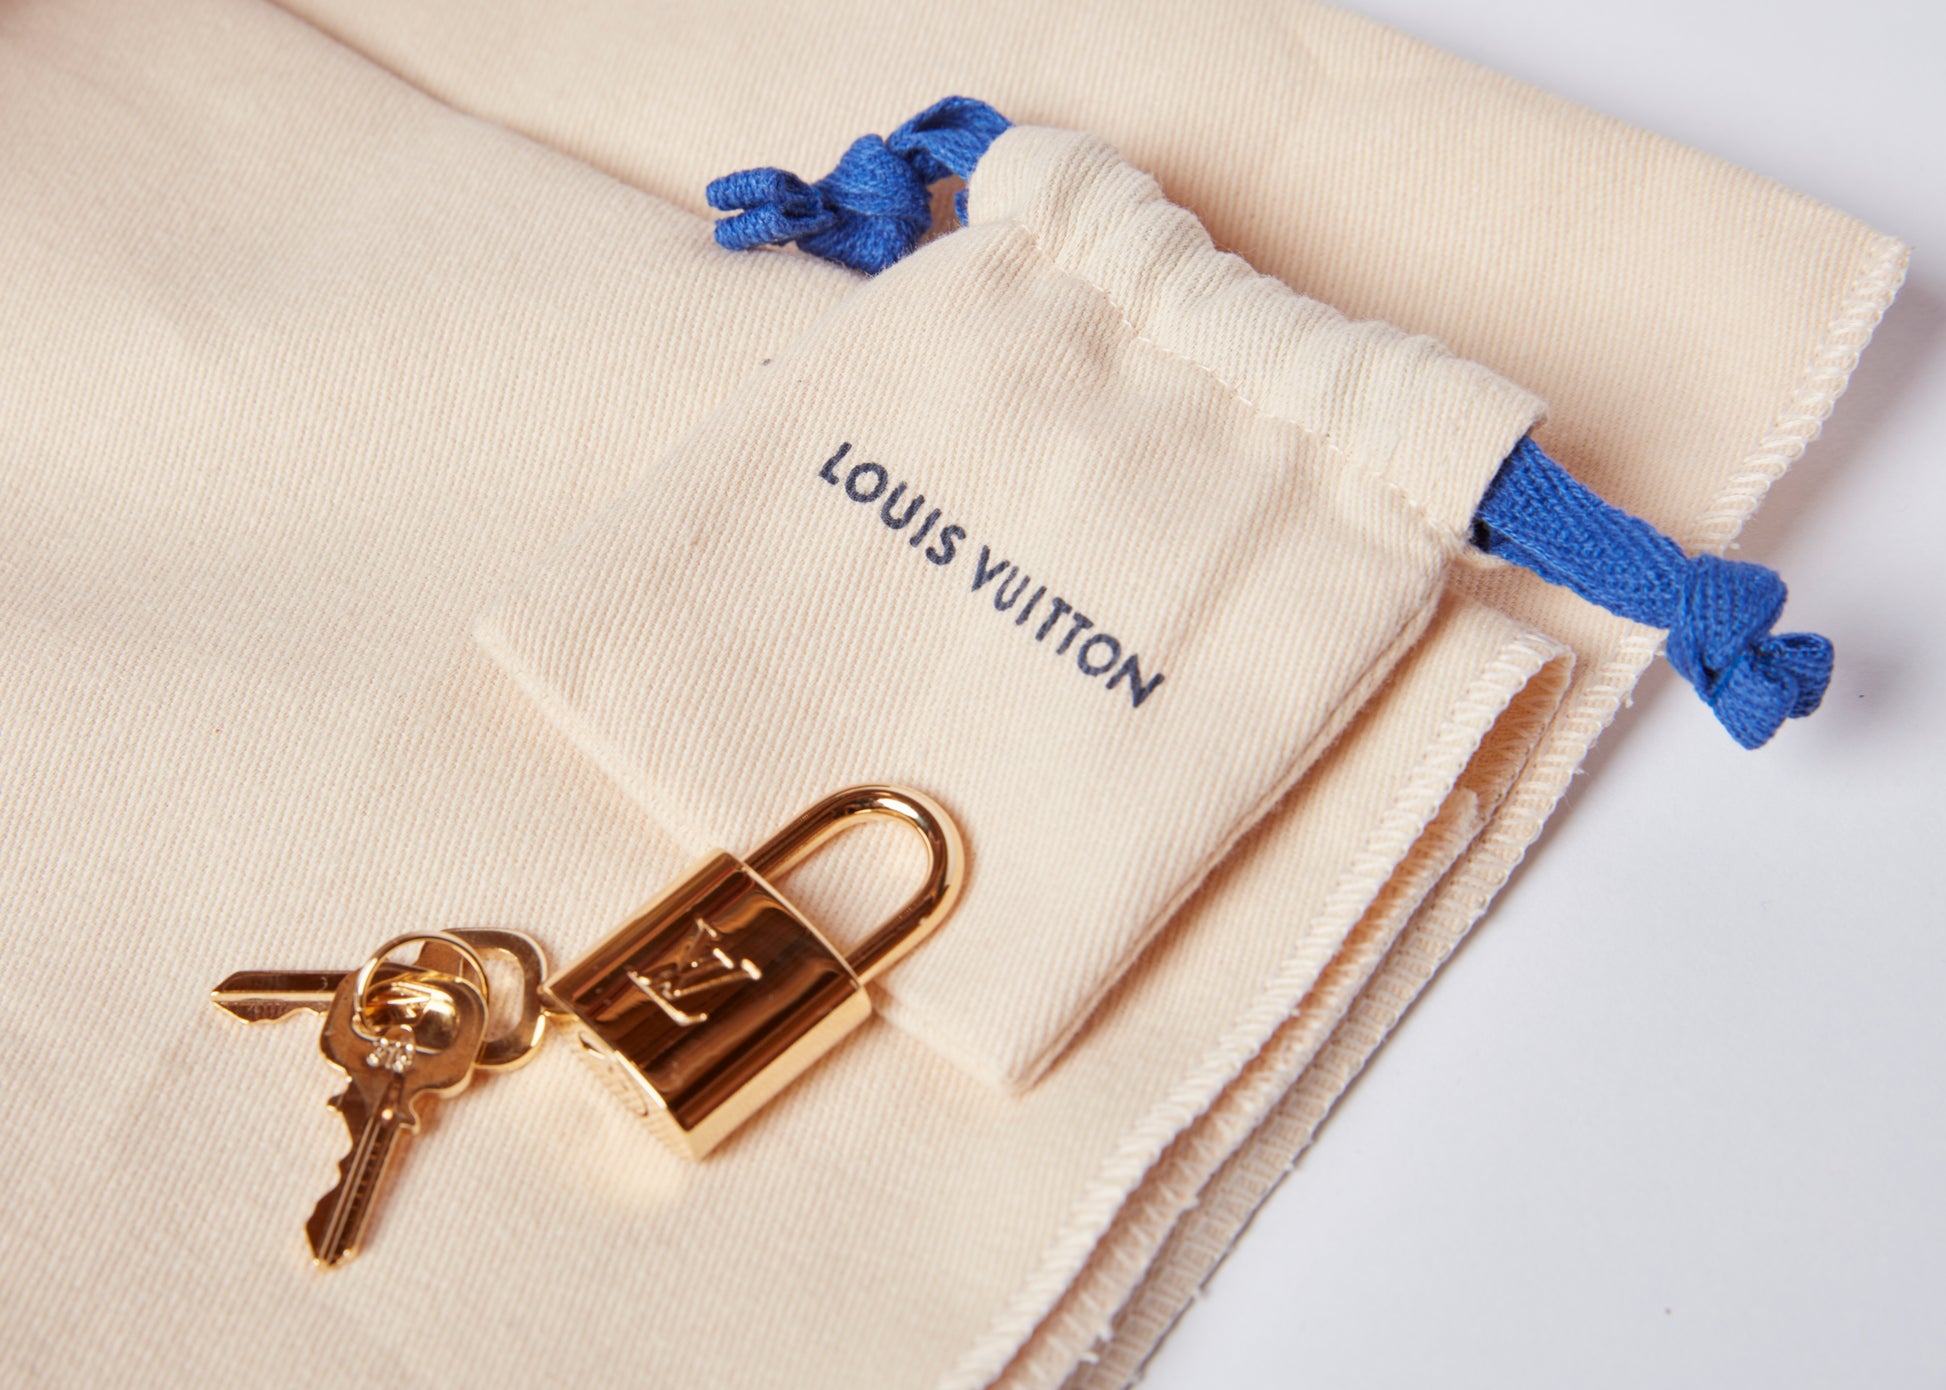 Louis Vuitton Garden Collection Speedy B 25 #louisvuitton